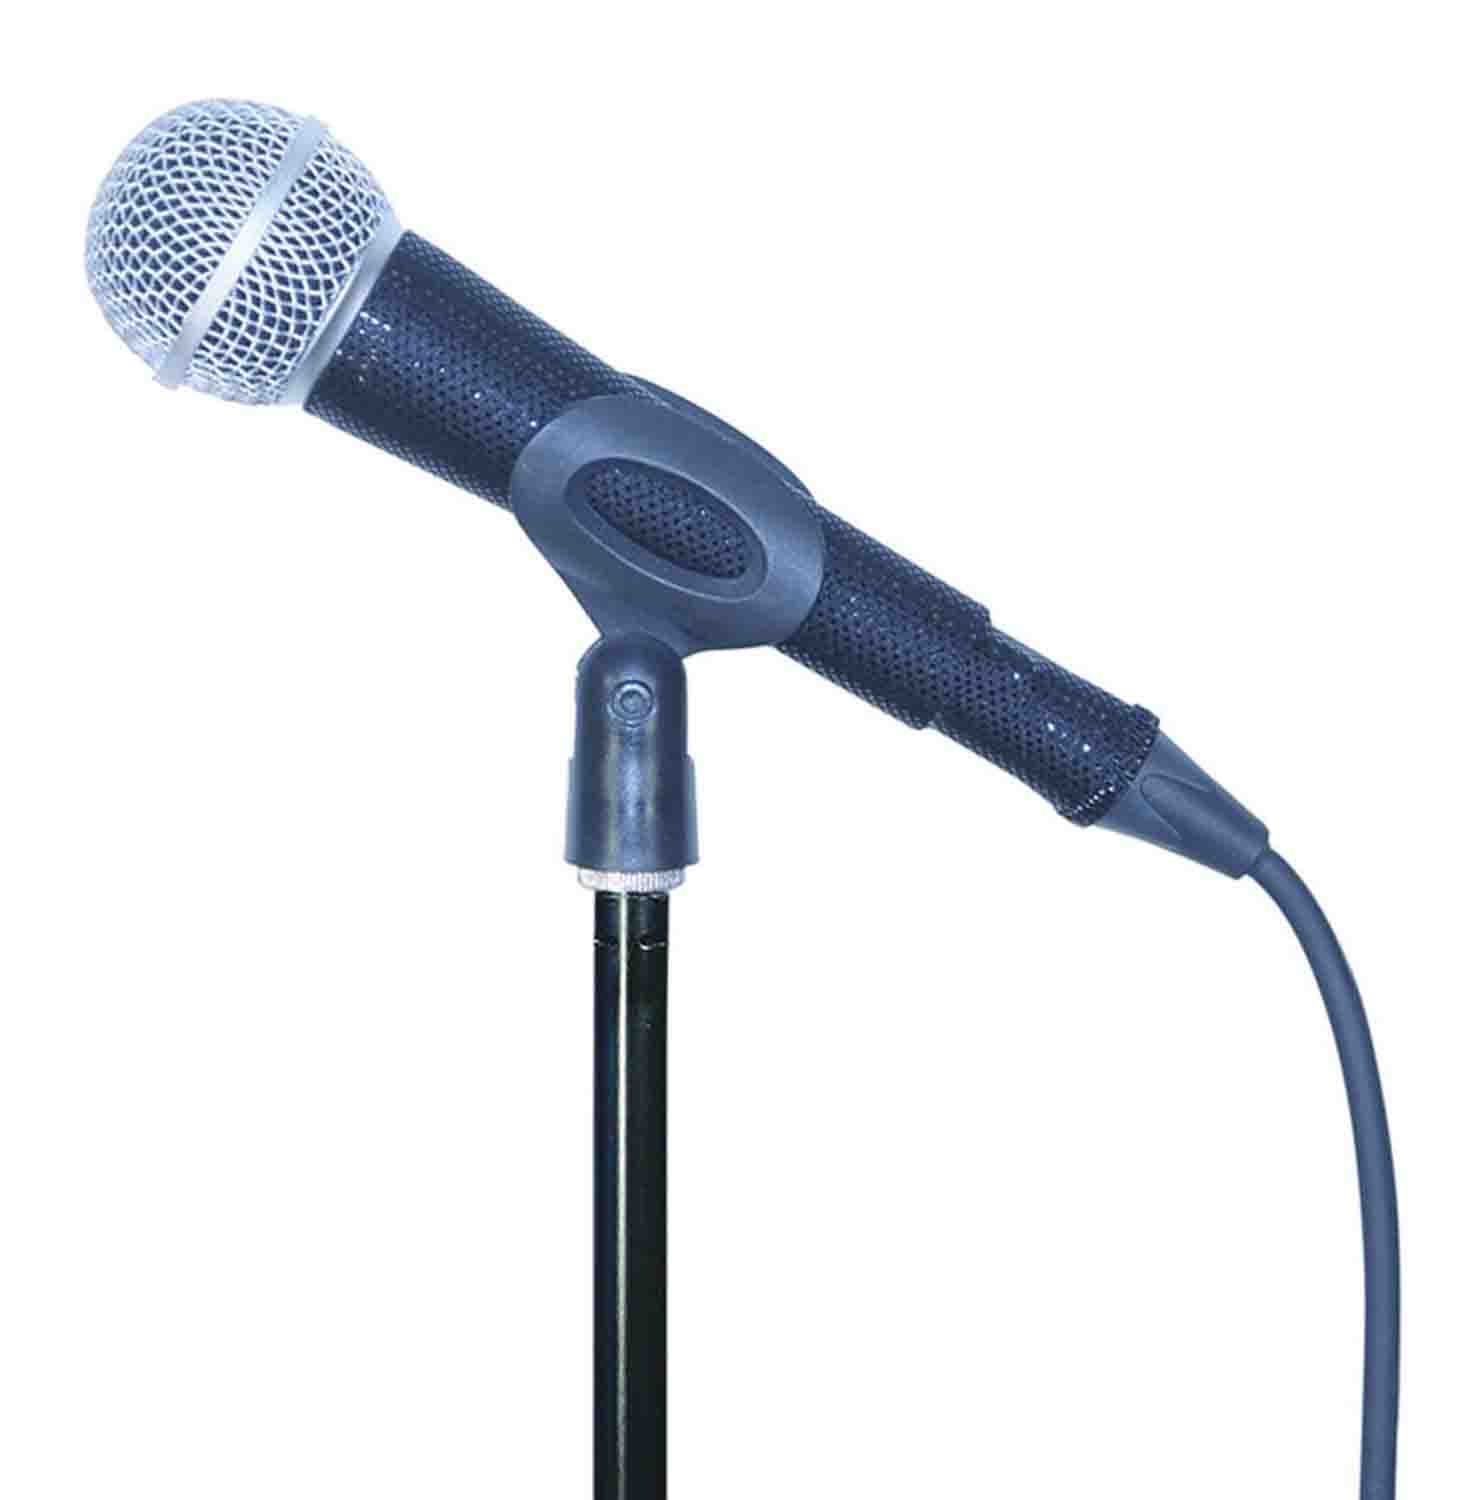 B-Stock: MicFX SF074 Laser Cut Corded Microphone Sleeve - Black by MicFX